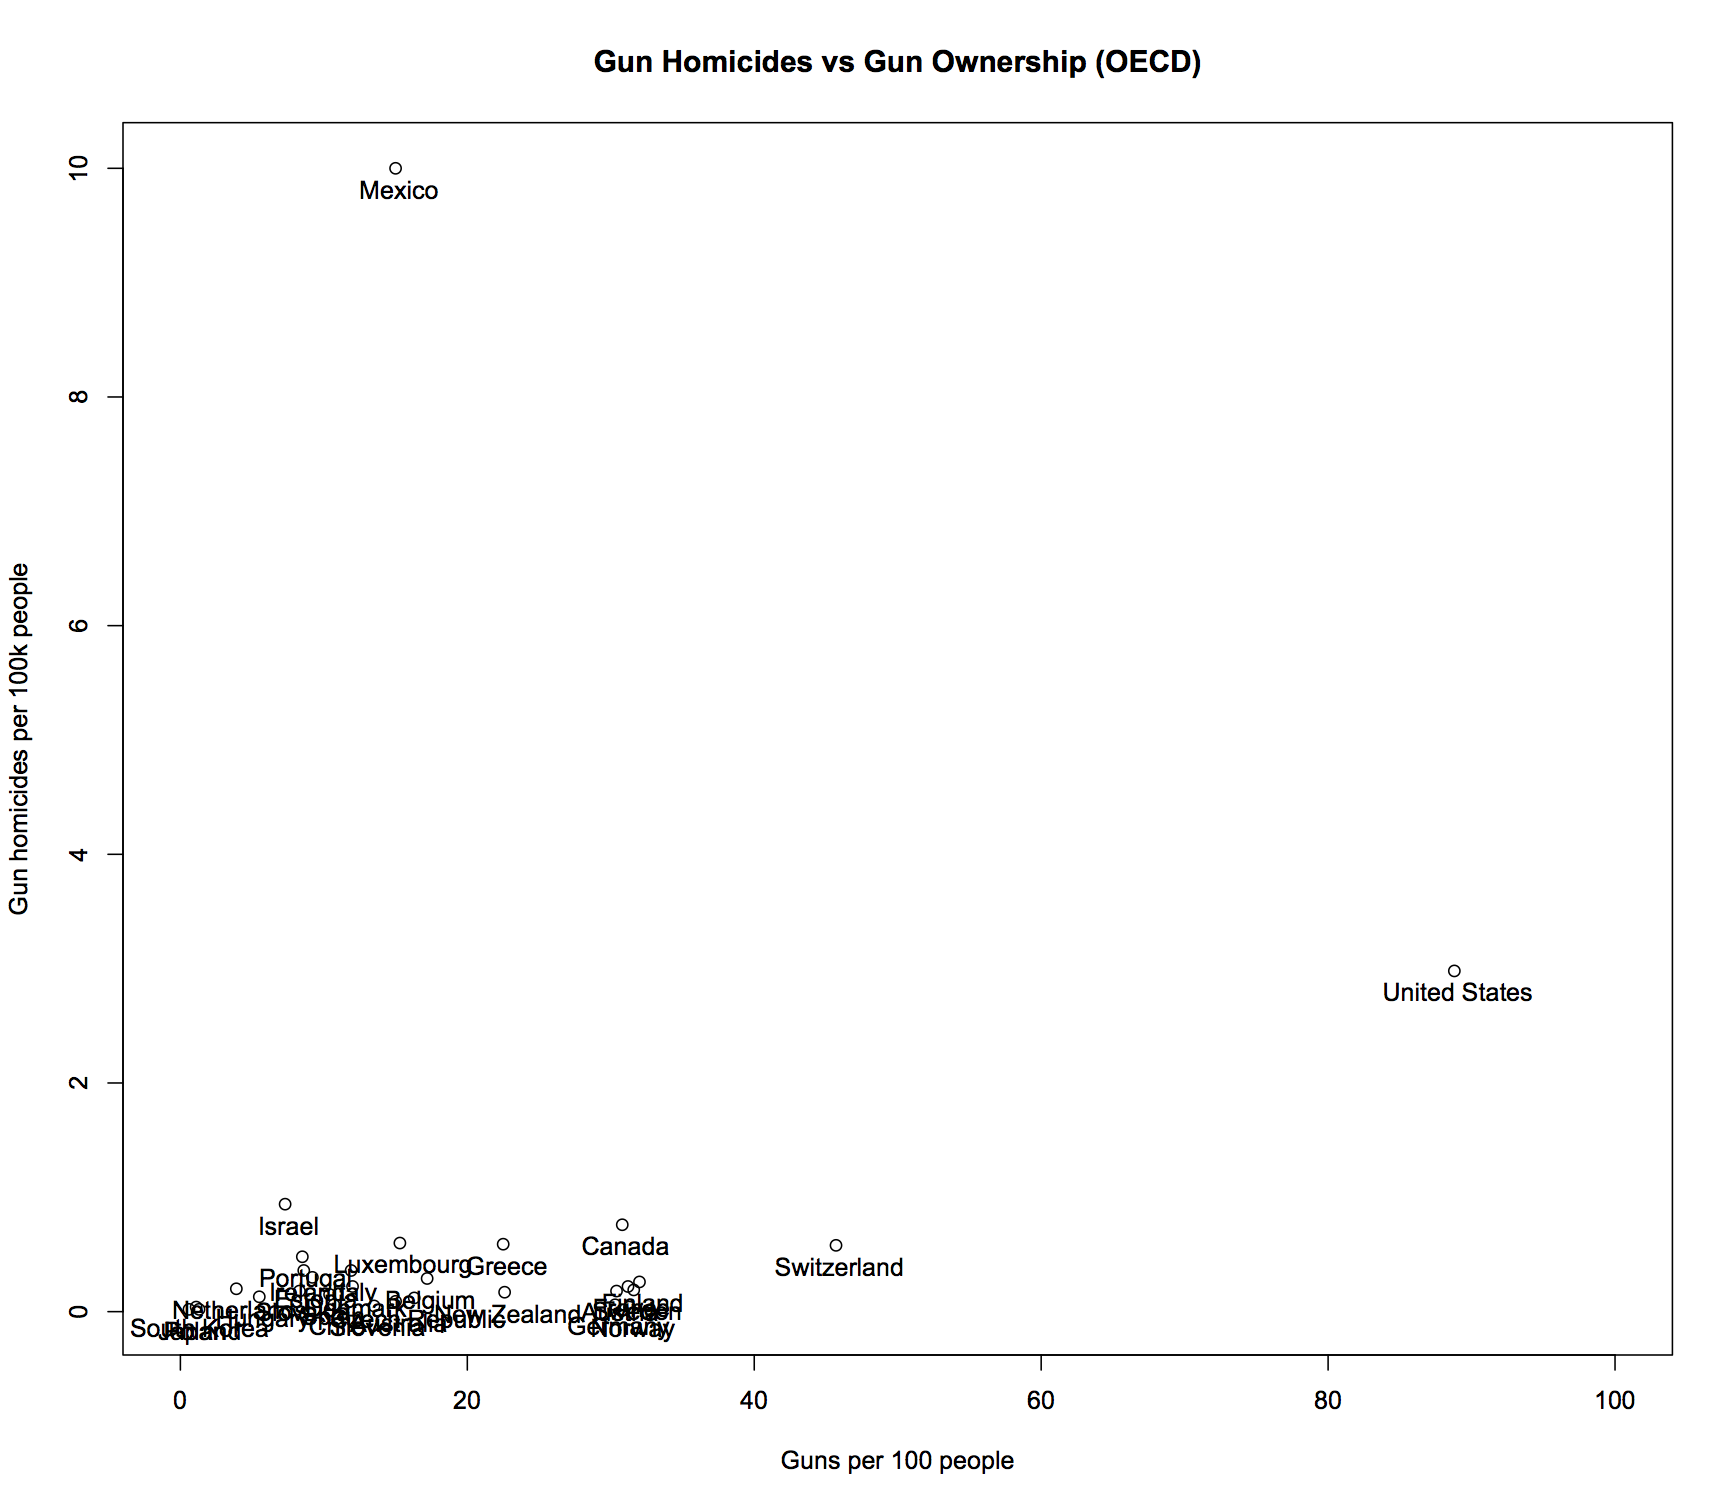 Gun homicides vs. Gun Ownership for OECD countries